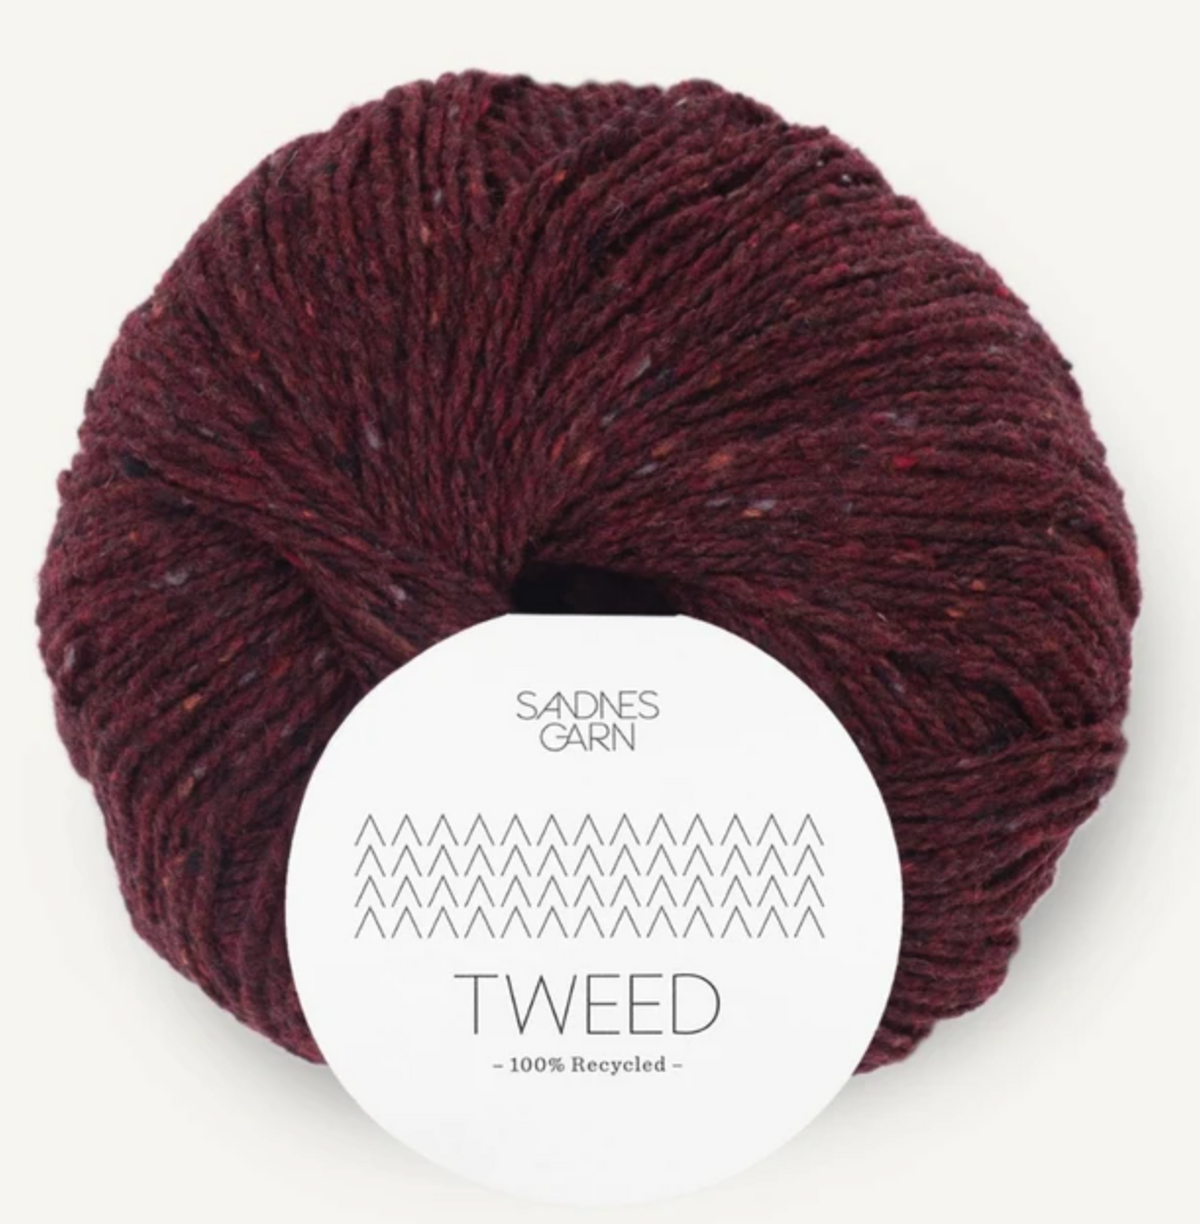 Sandnes Garn - Recycled Tweed - YourNextKnit